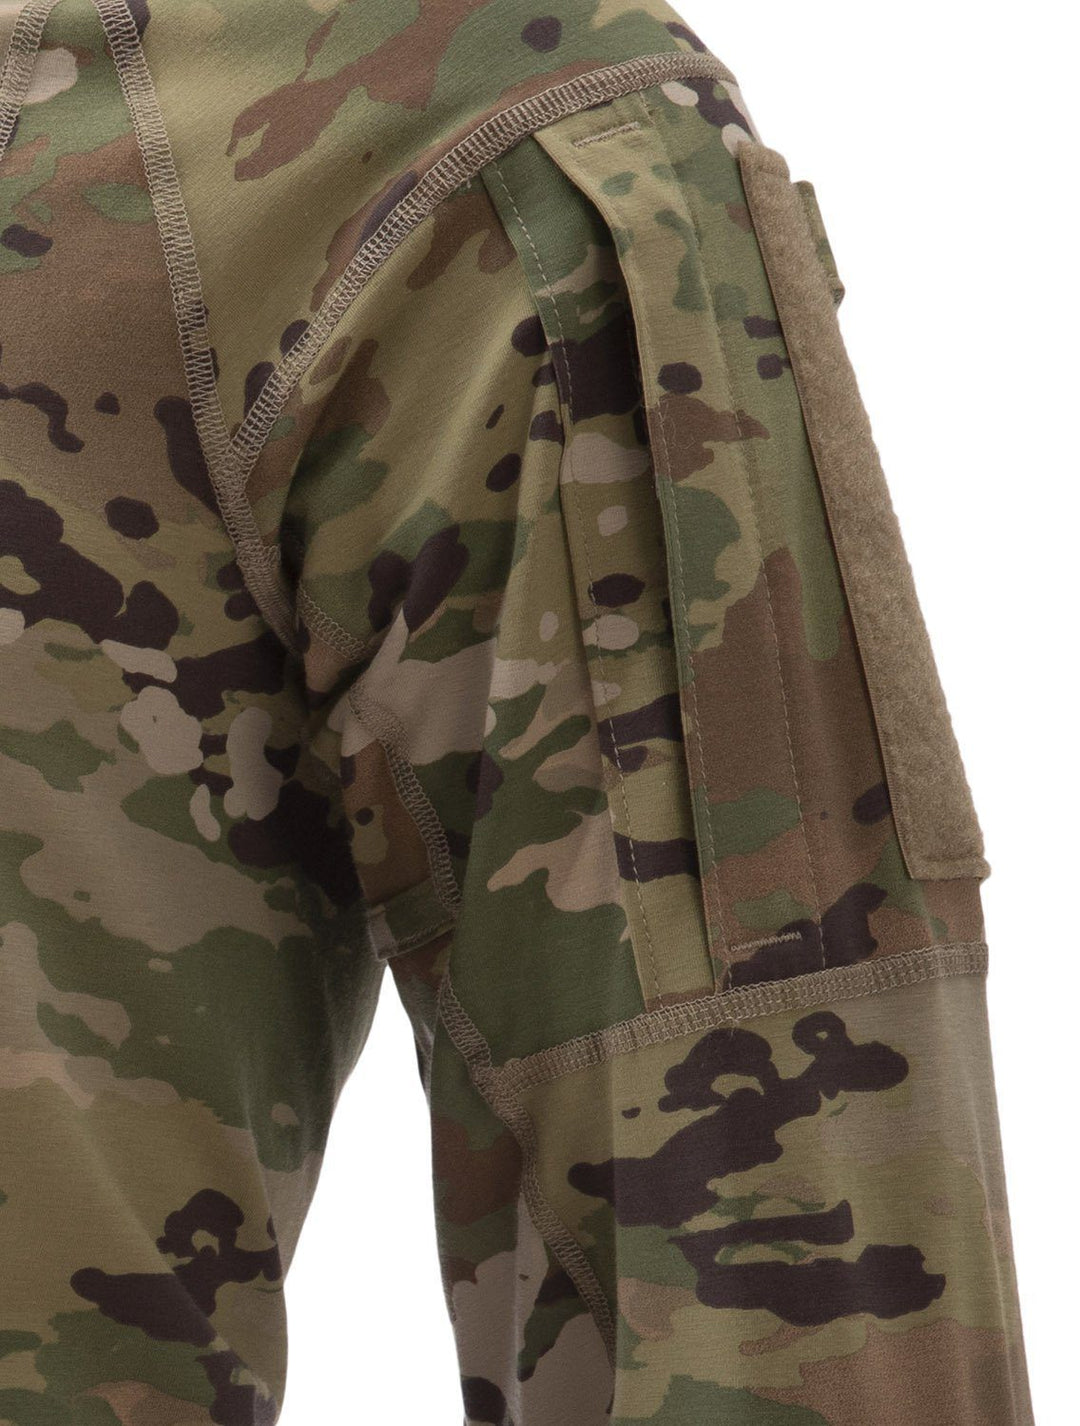 Apparel - Tops - Combat - MASSIF Army Combat Shirt ACS Type II Alternate Women's Fit - FR